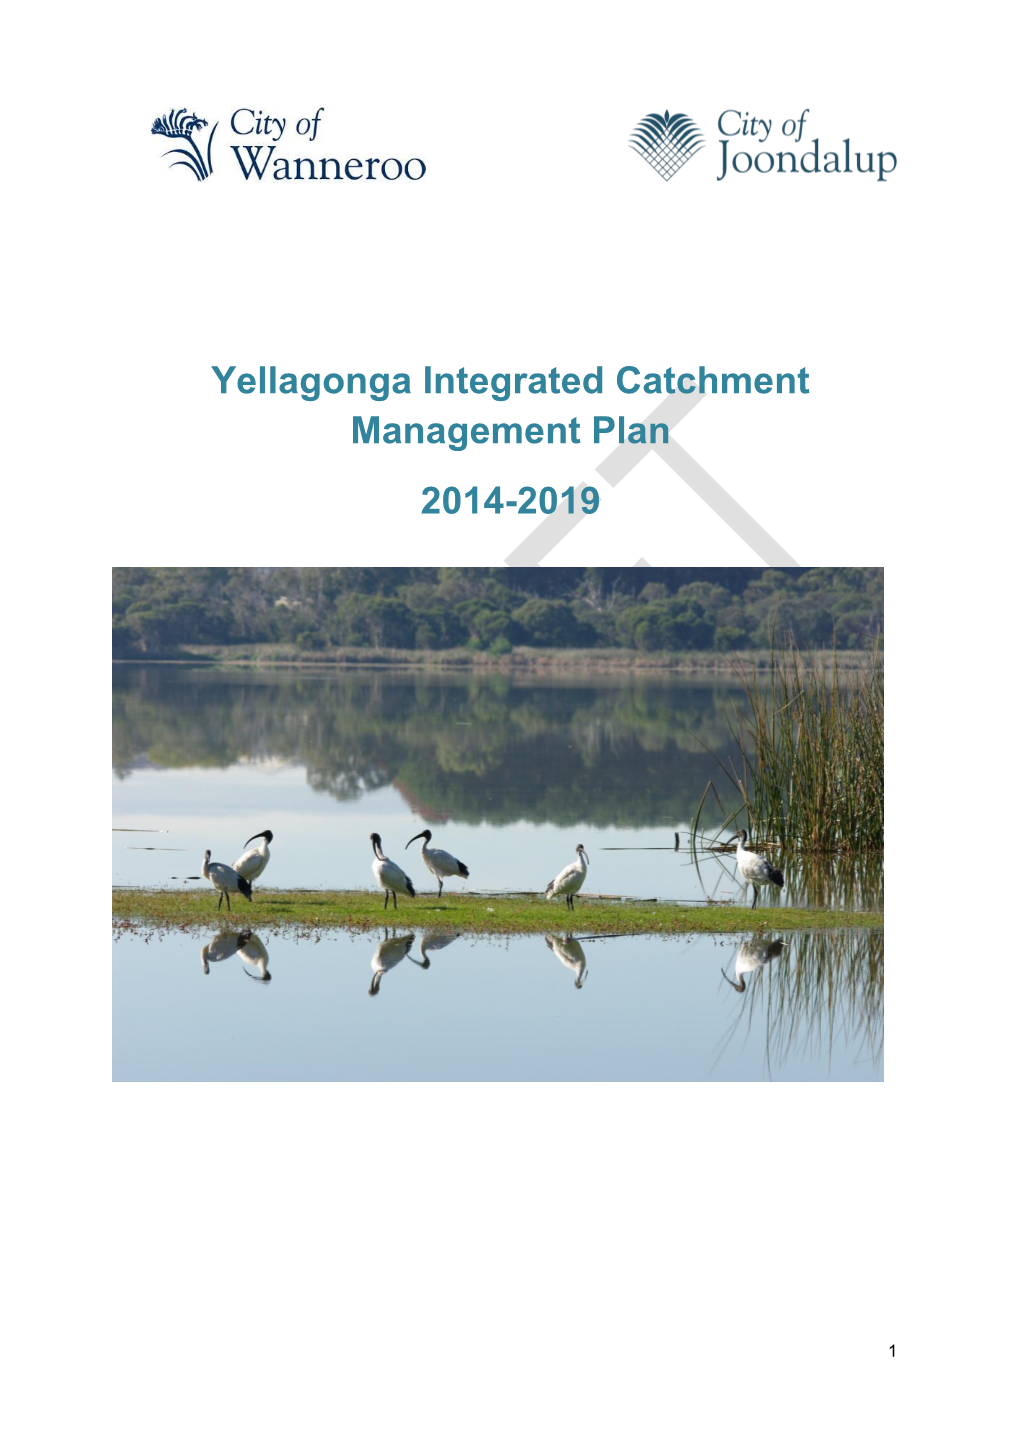 Yellagonga Integrated Catchment Management Plan 2014-2019